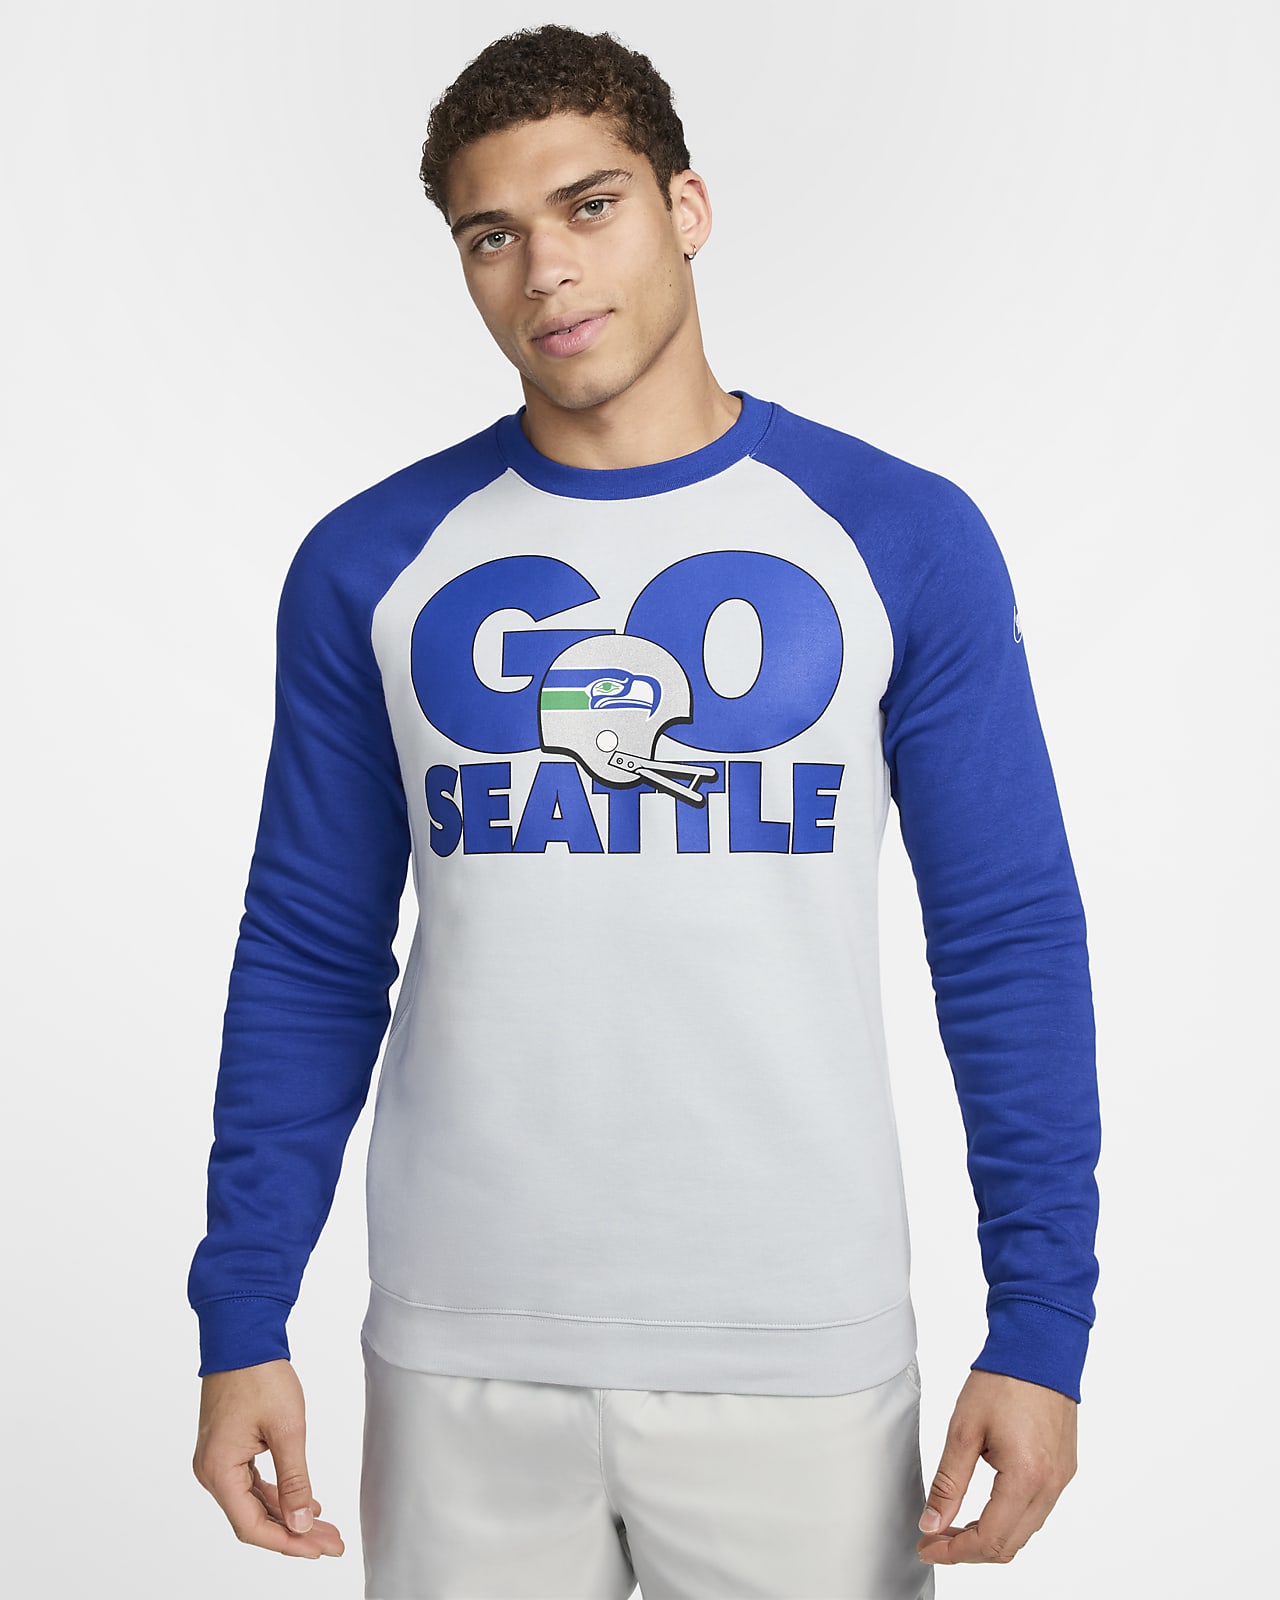 Sweatshirt Nike Historic Raglan (NFL Seahawks) för män